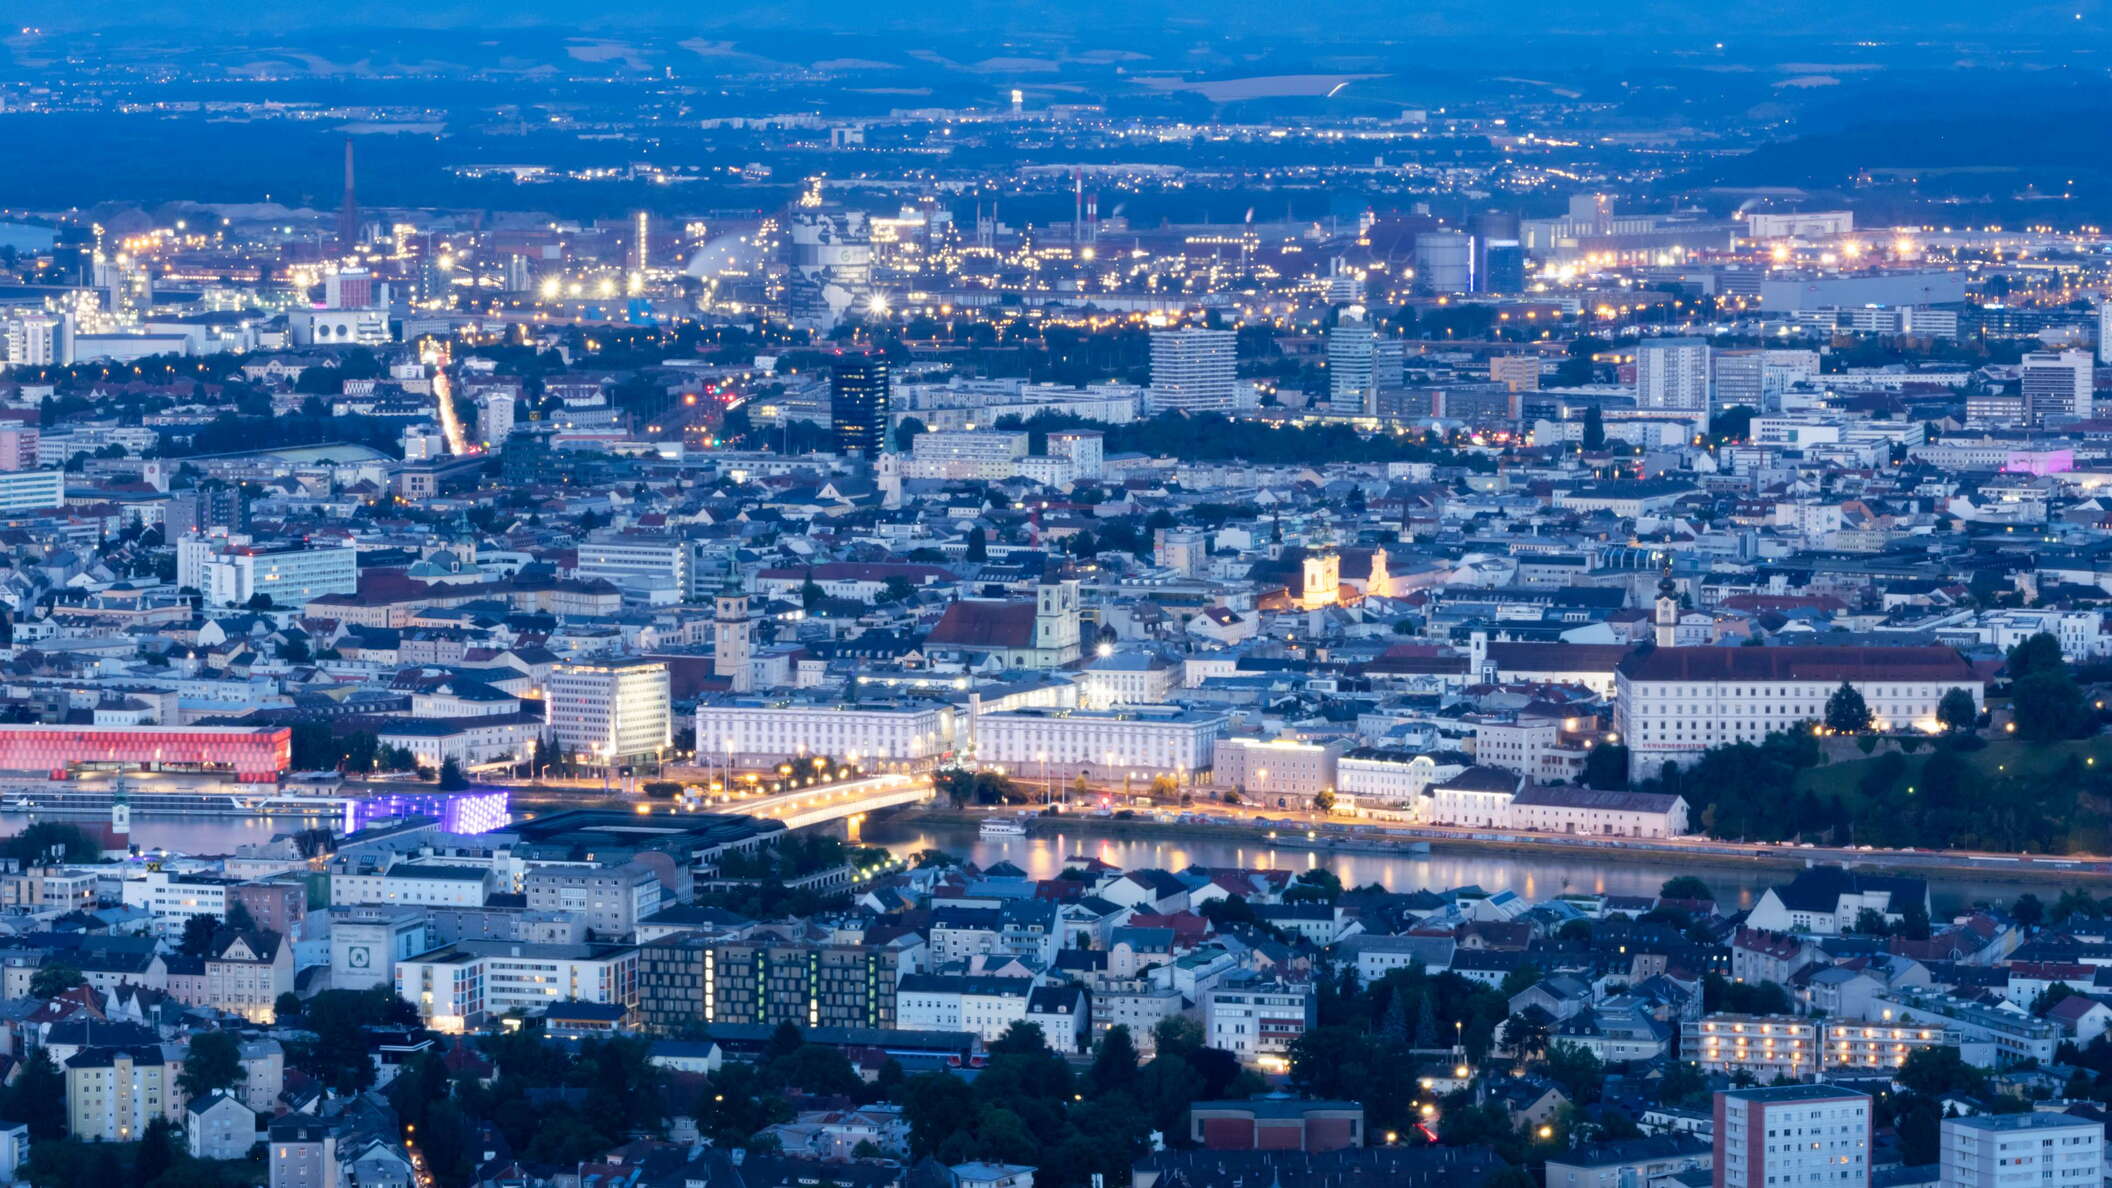 Linz | City centre and Vöestalpine at night